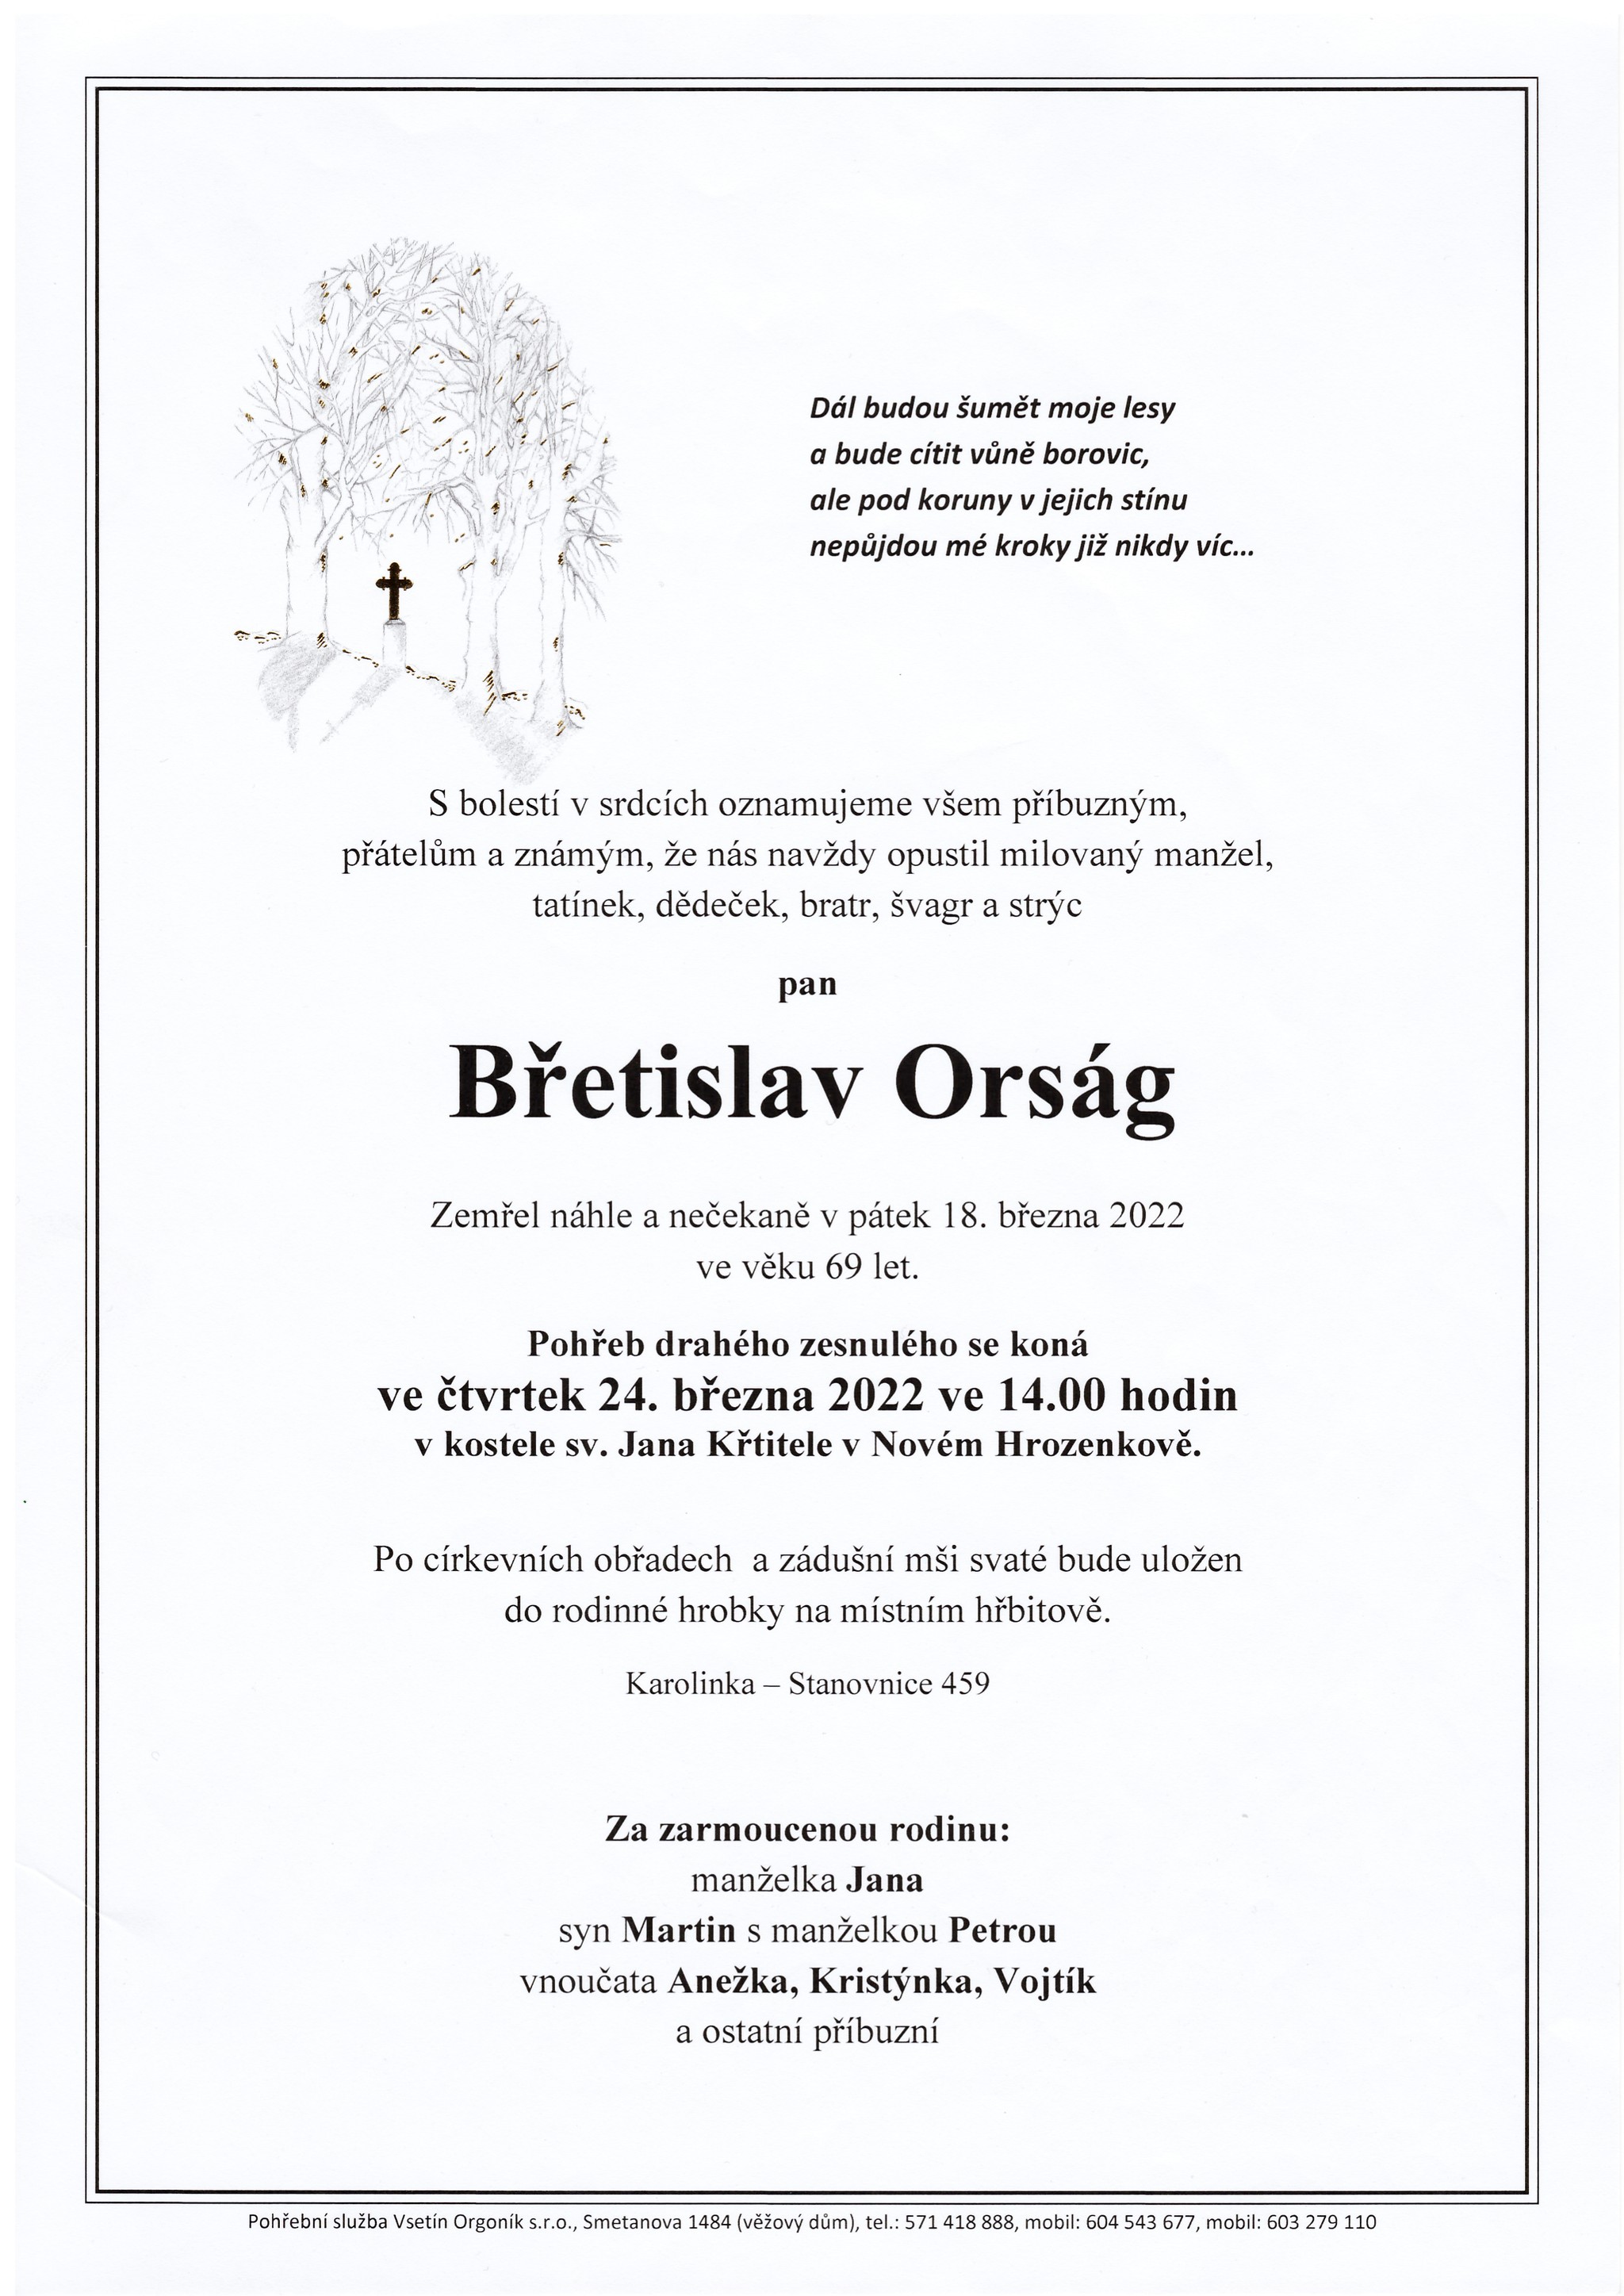 Břetislav Orság